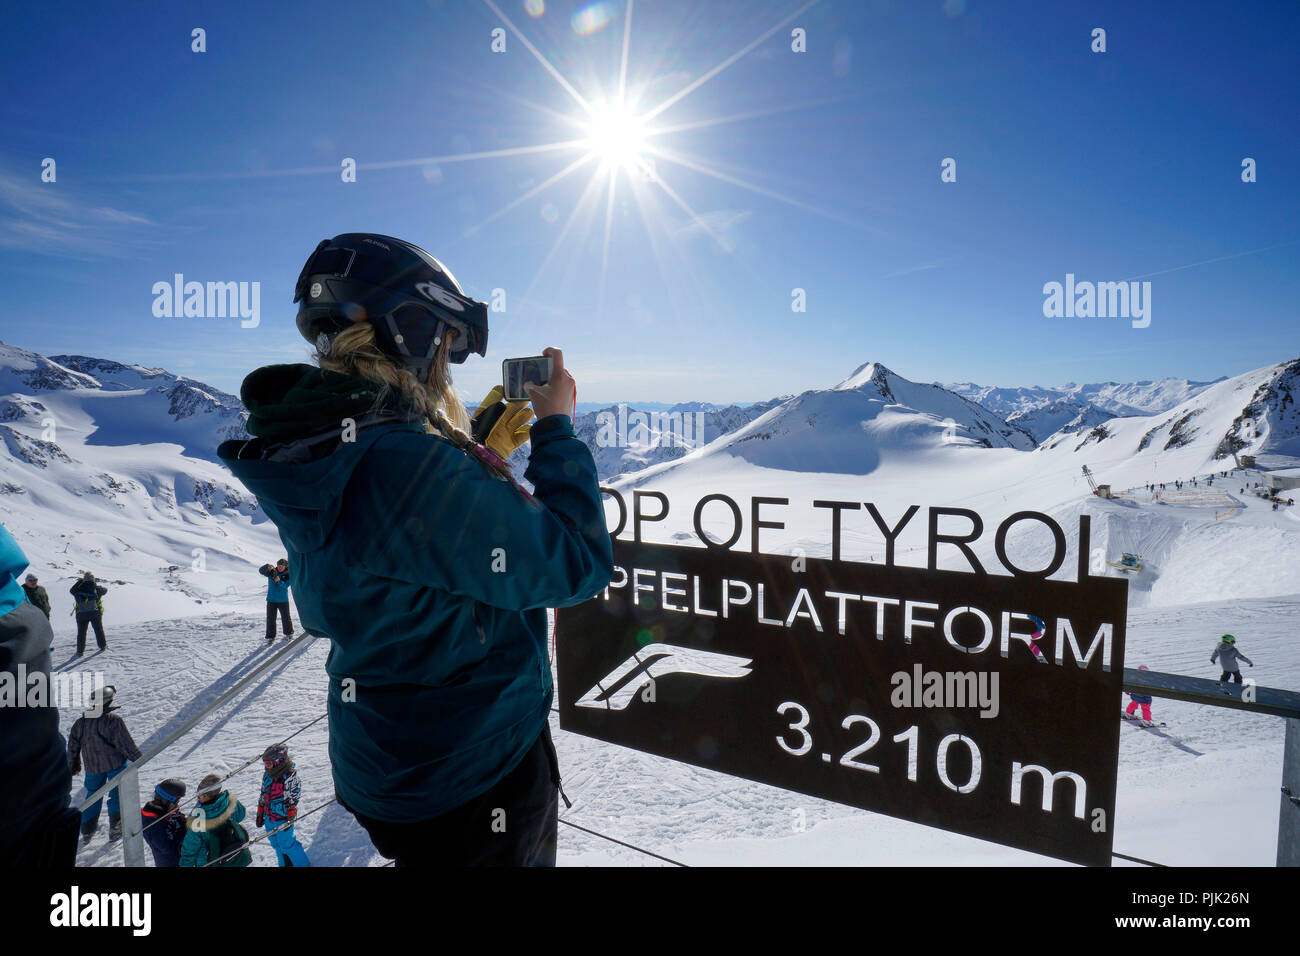 Austria, Tyrol, Stubai Valley, Neustift, Stubai Glacier, summit platform Top of Tyrol, 3210m, girl photographed with smartphone, sun Stock Photo